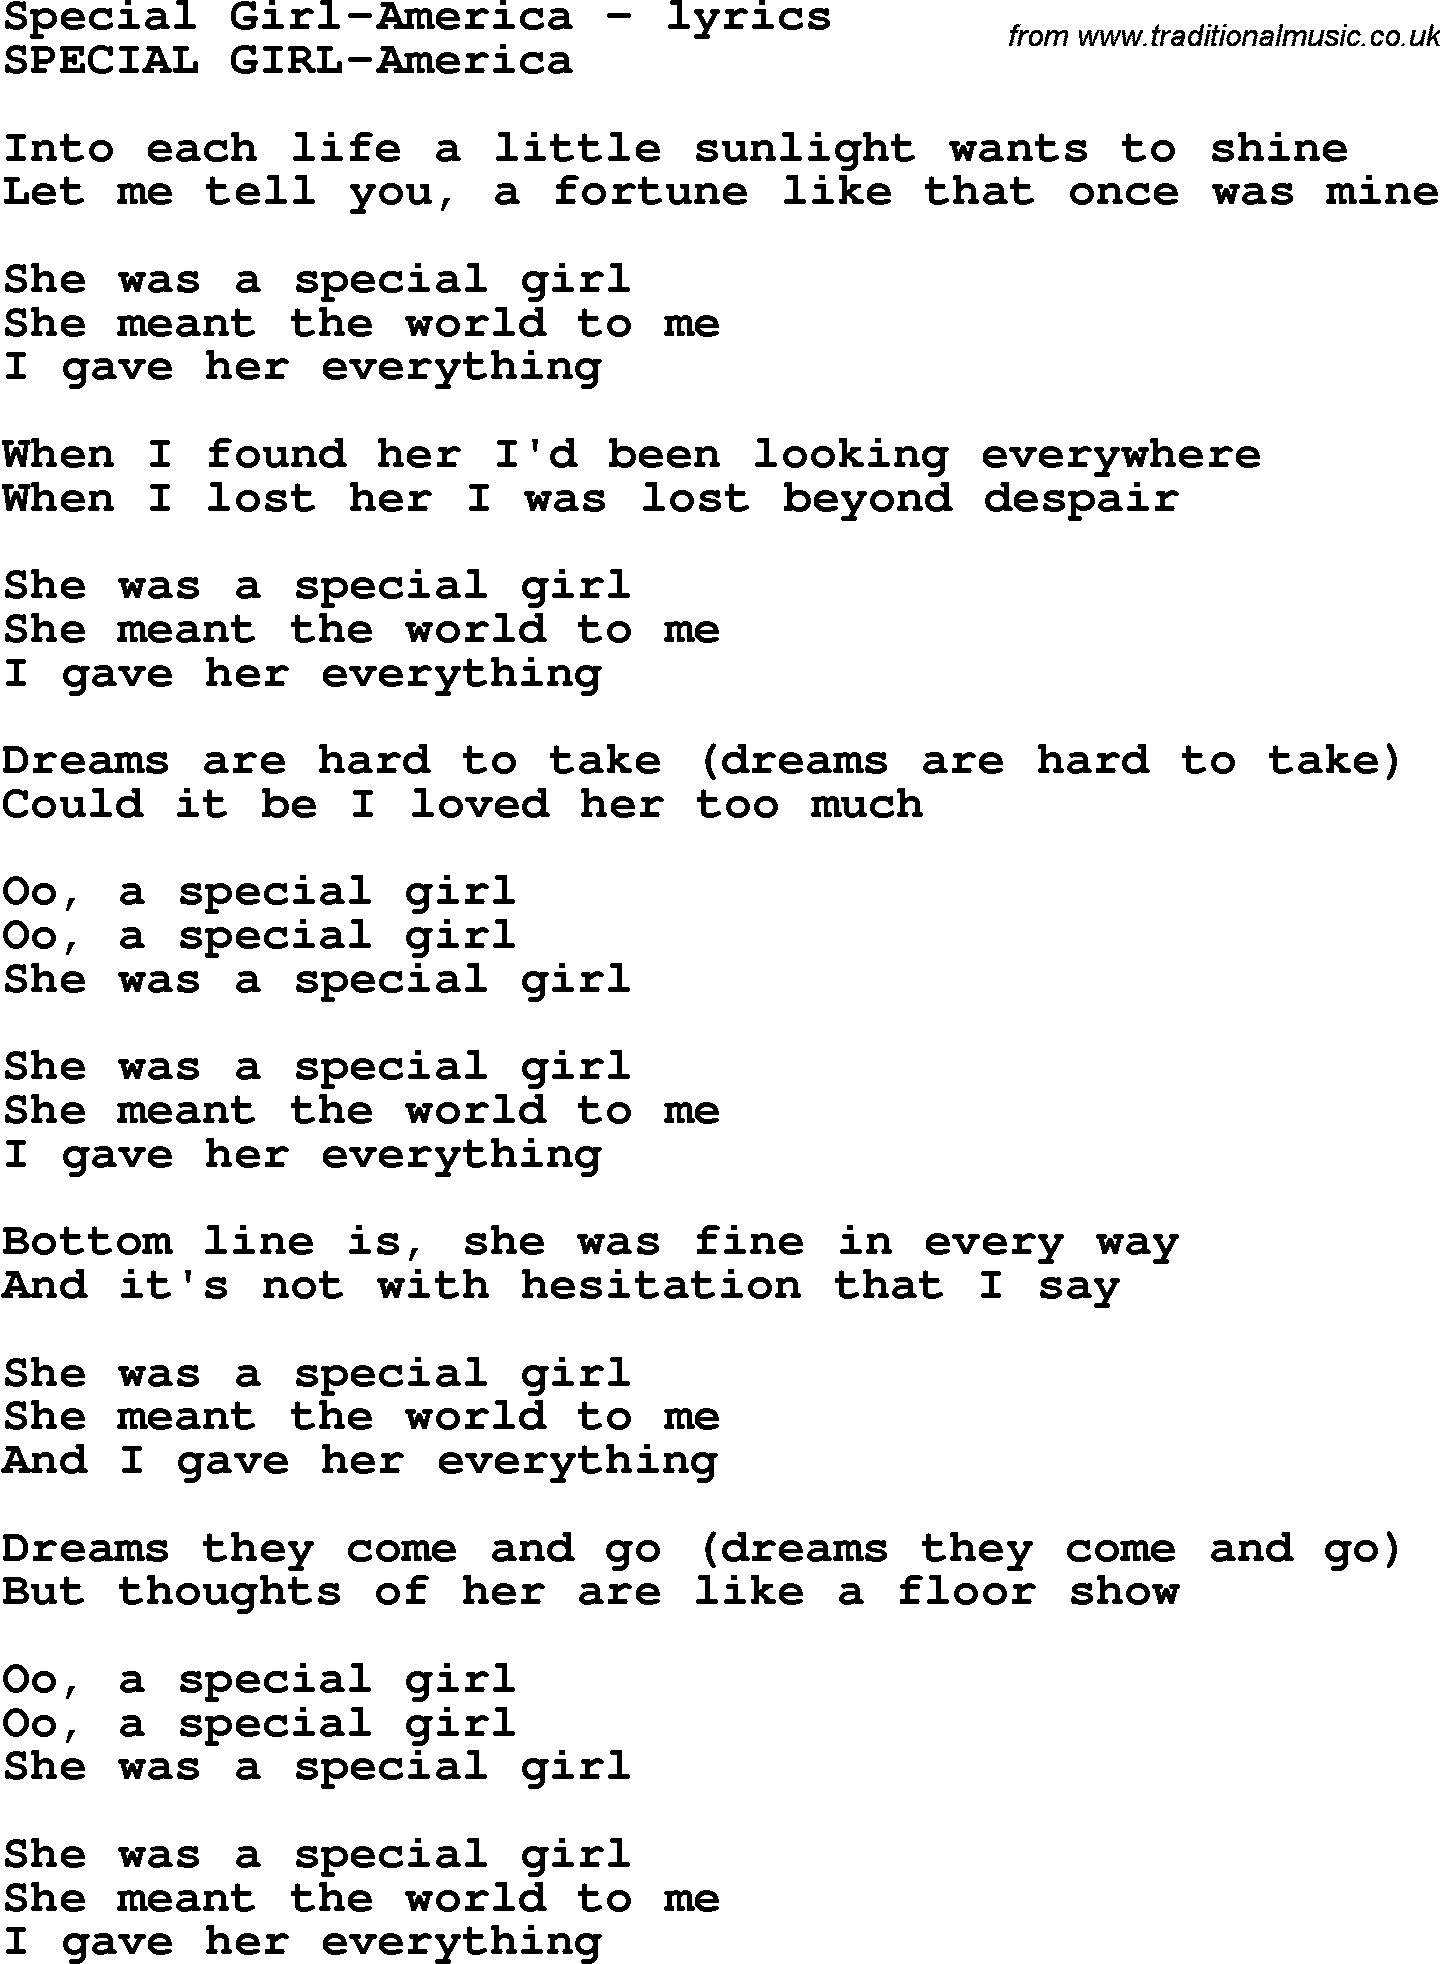 Love Song Lyrics for: Special Girl-America